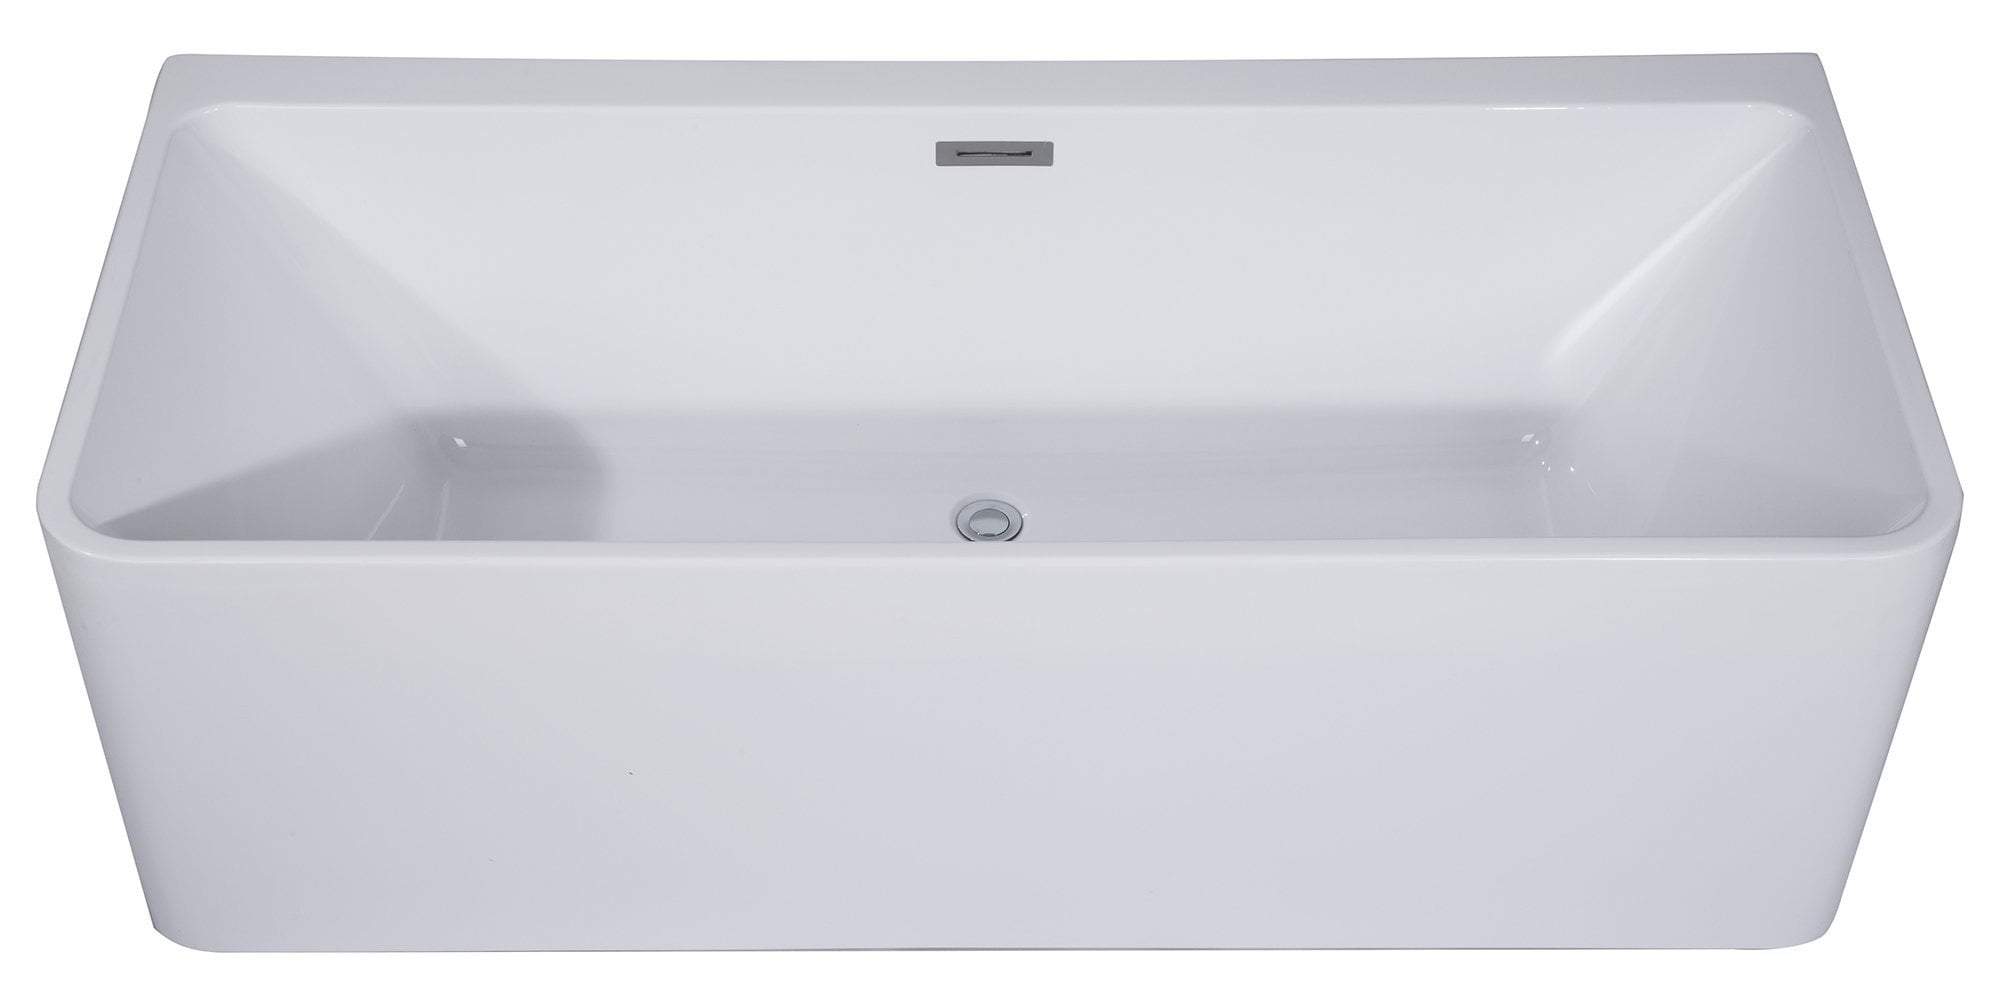 59 inch White Rectangular Acrylic Free Standing Soaking Bathtub